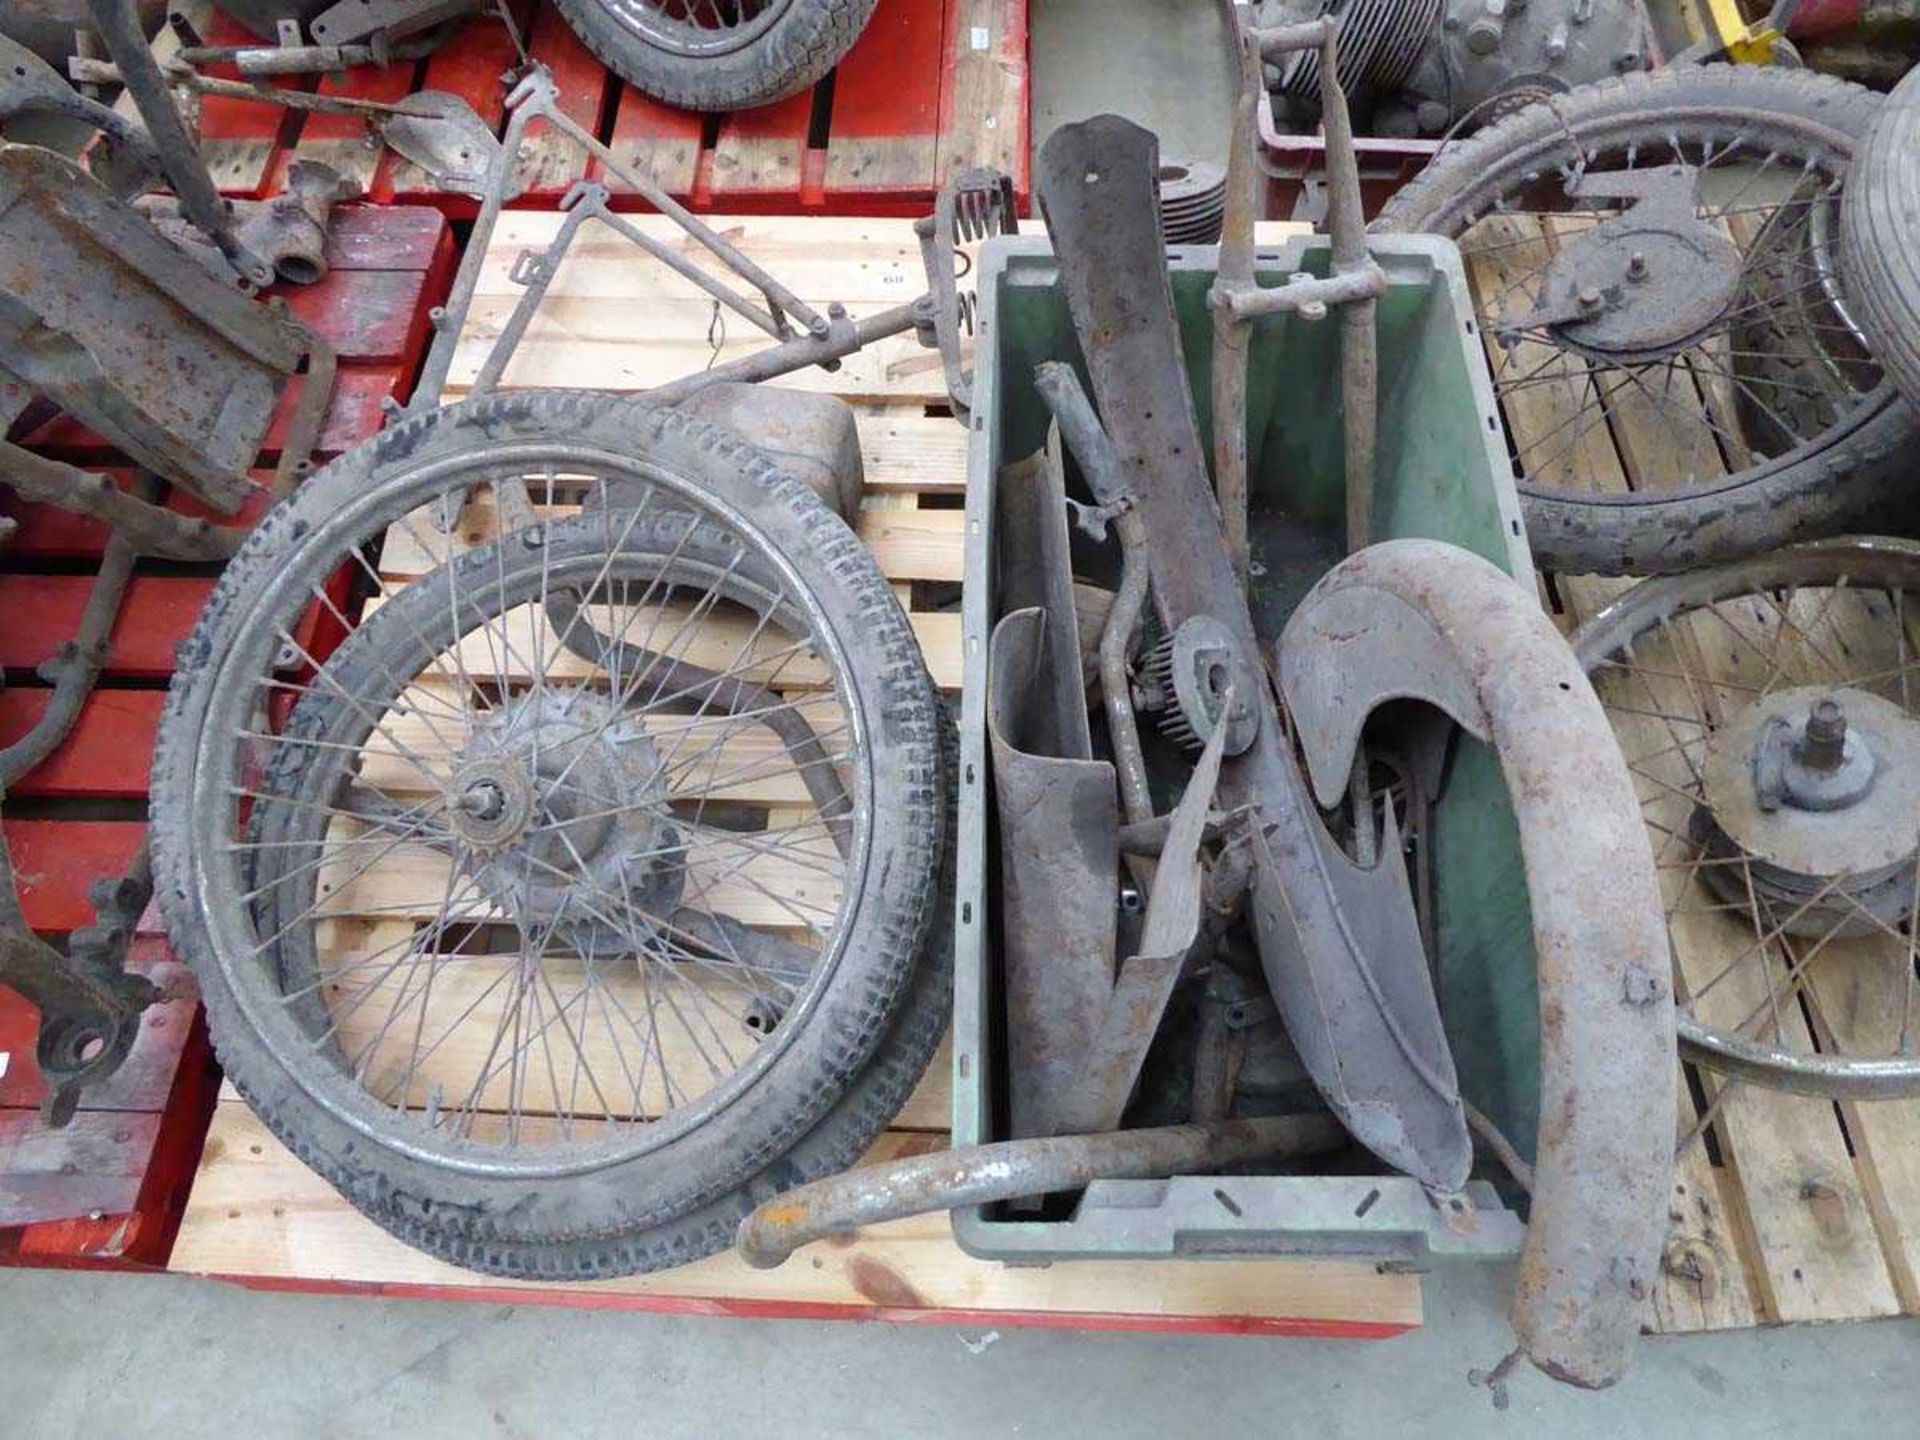 Pallet of vintage motorcycle parts including frame, wheels, mudguards, etc